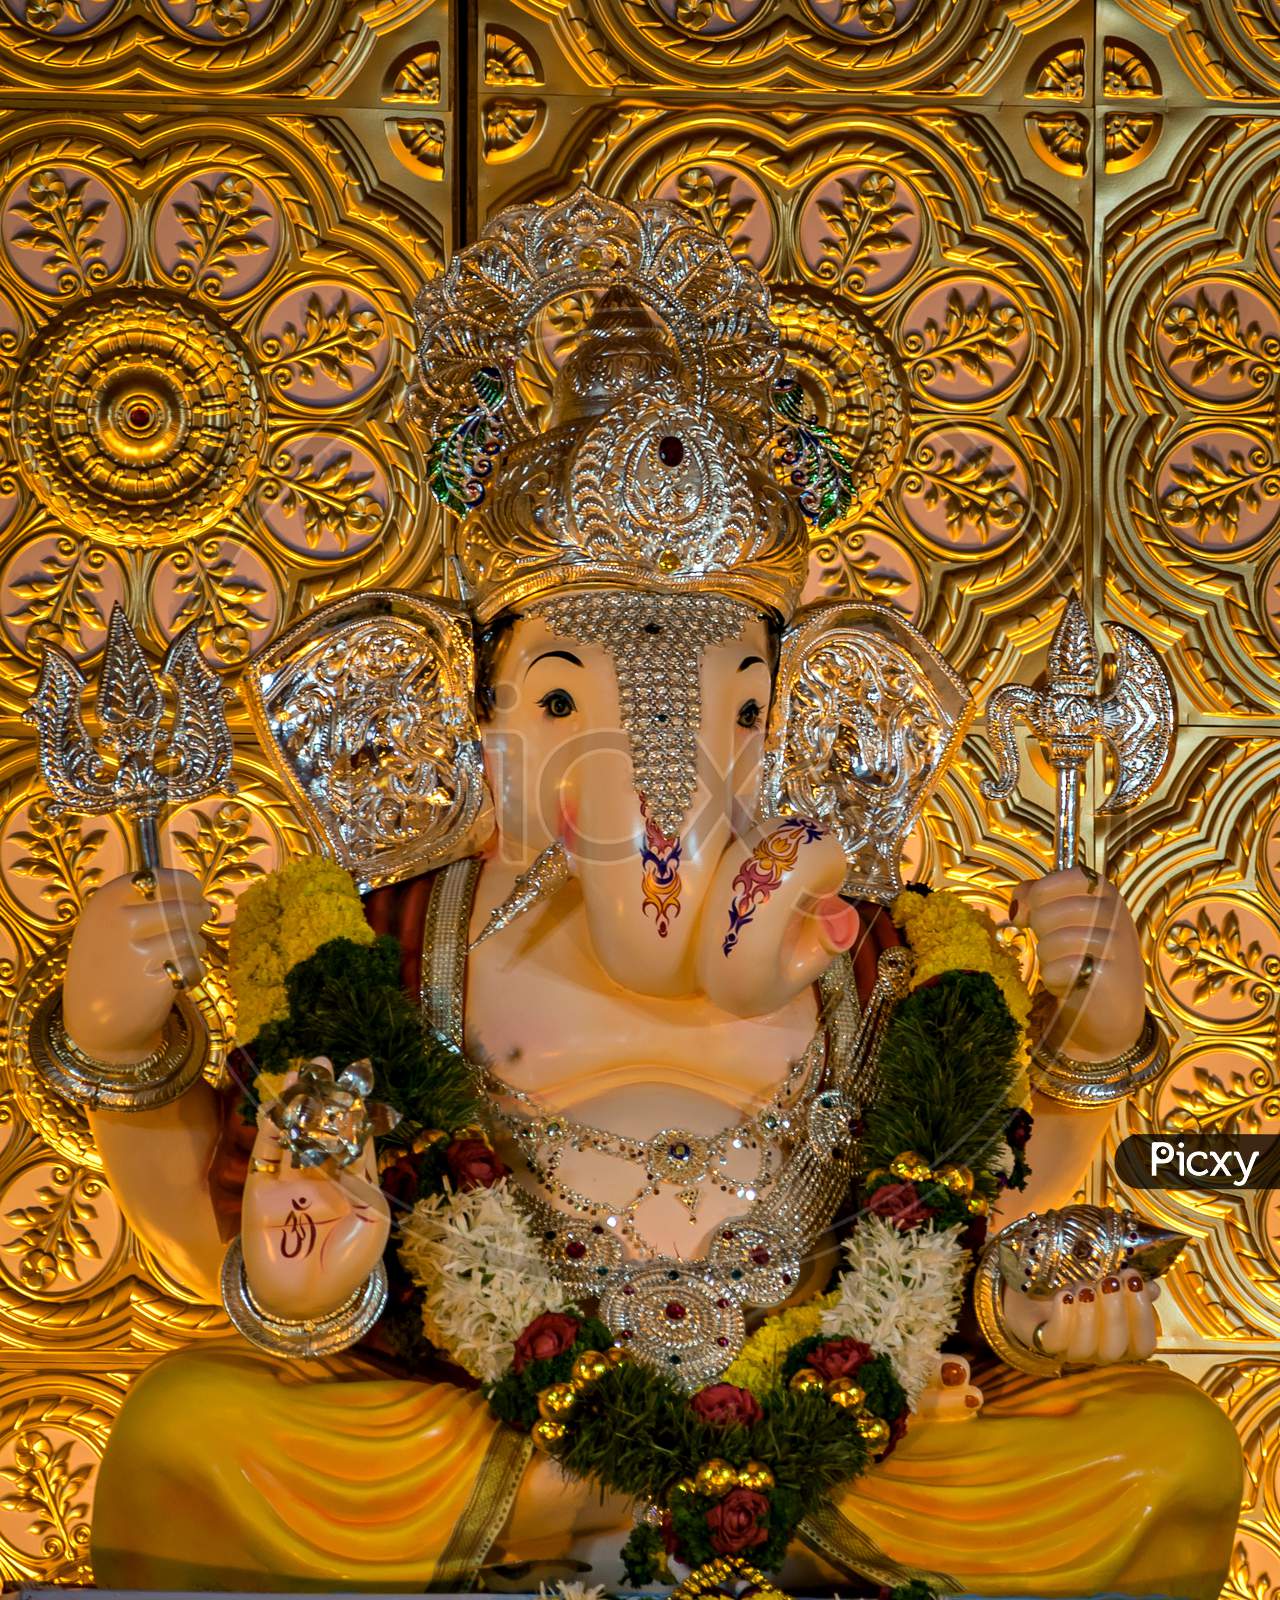 Closeup View Of Decorated And Garlanded Isolated Idol Of Hindu God Ganesha.